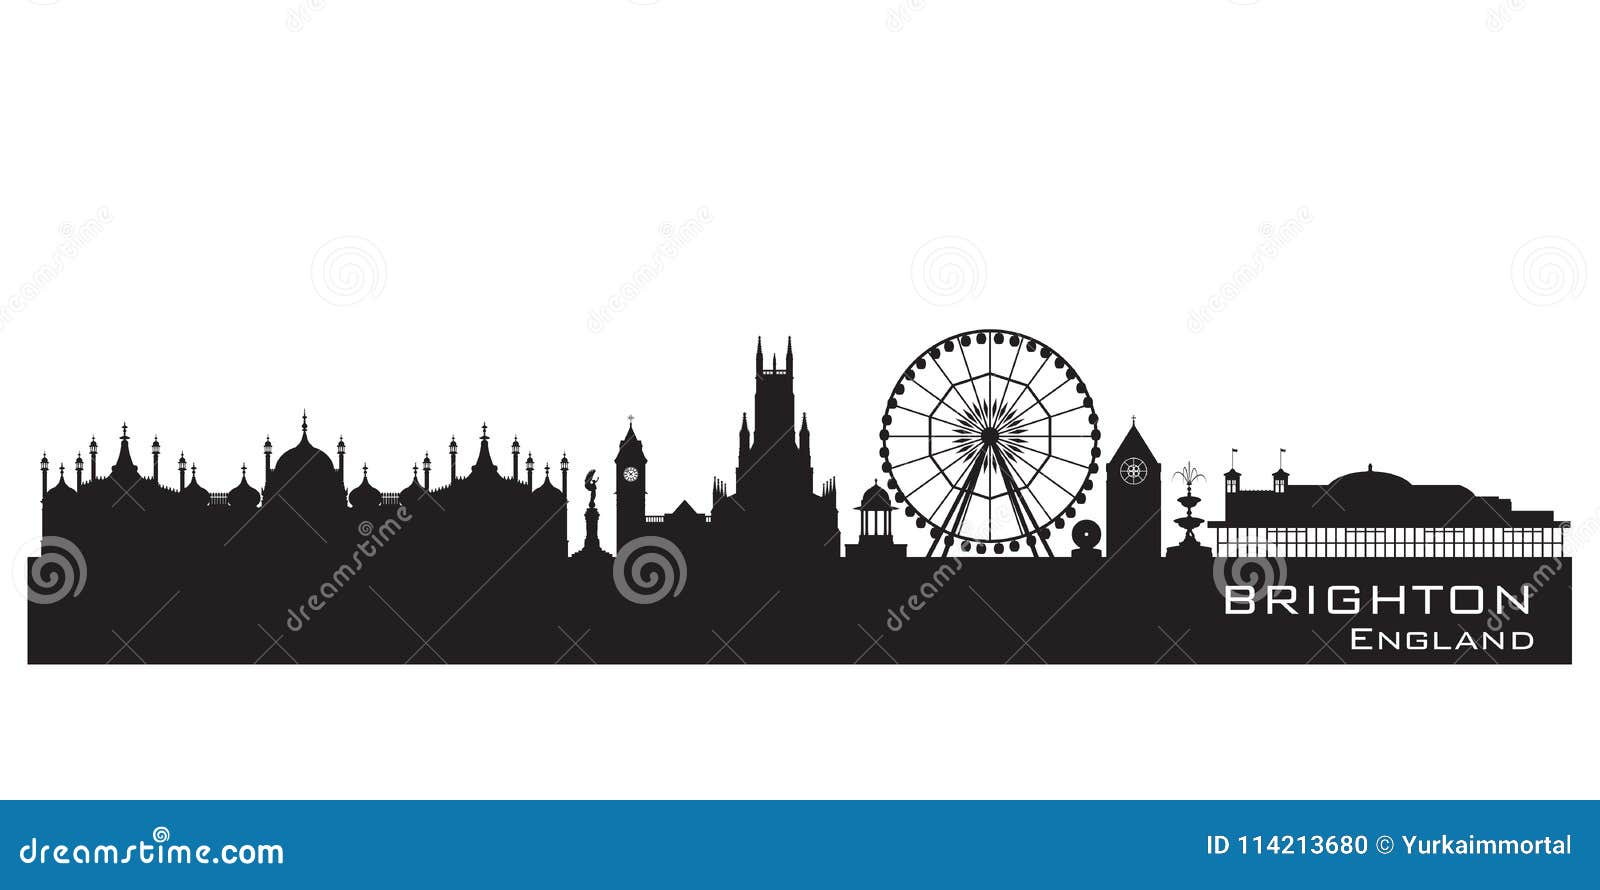 brighton england city skyline. detailed silhouette